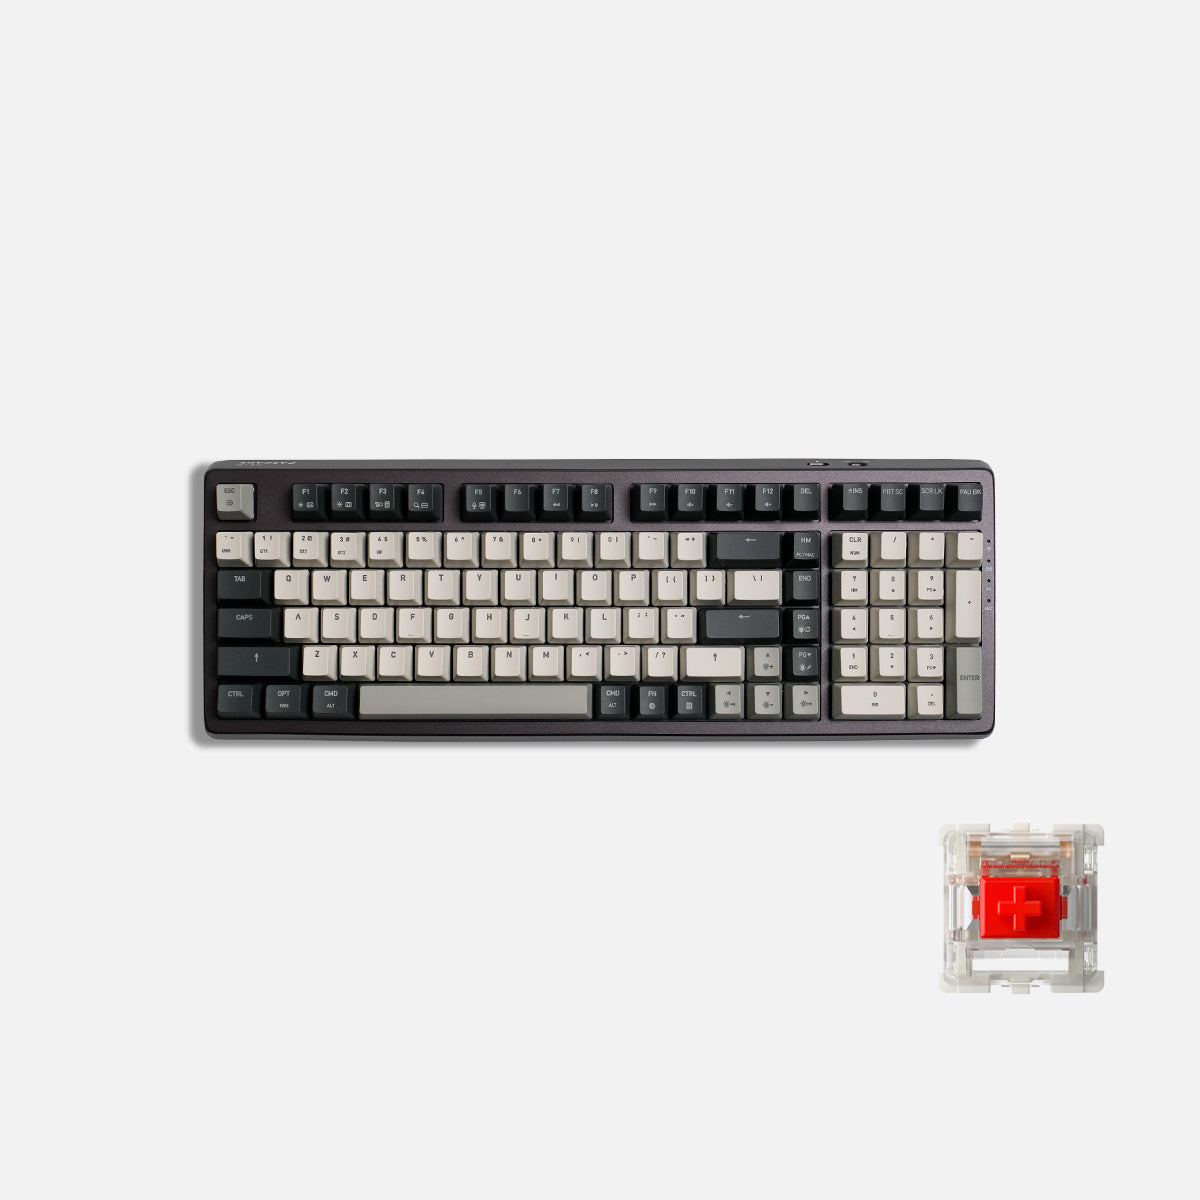 Cascade 98 % kabellose, Hot-Swap-fähige Tastatur